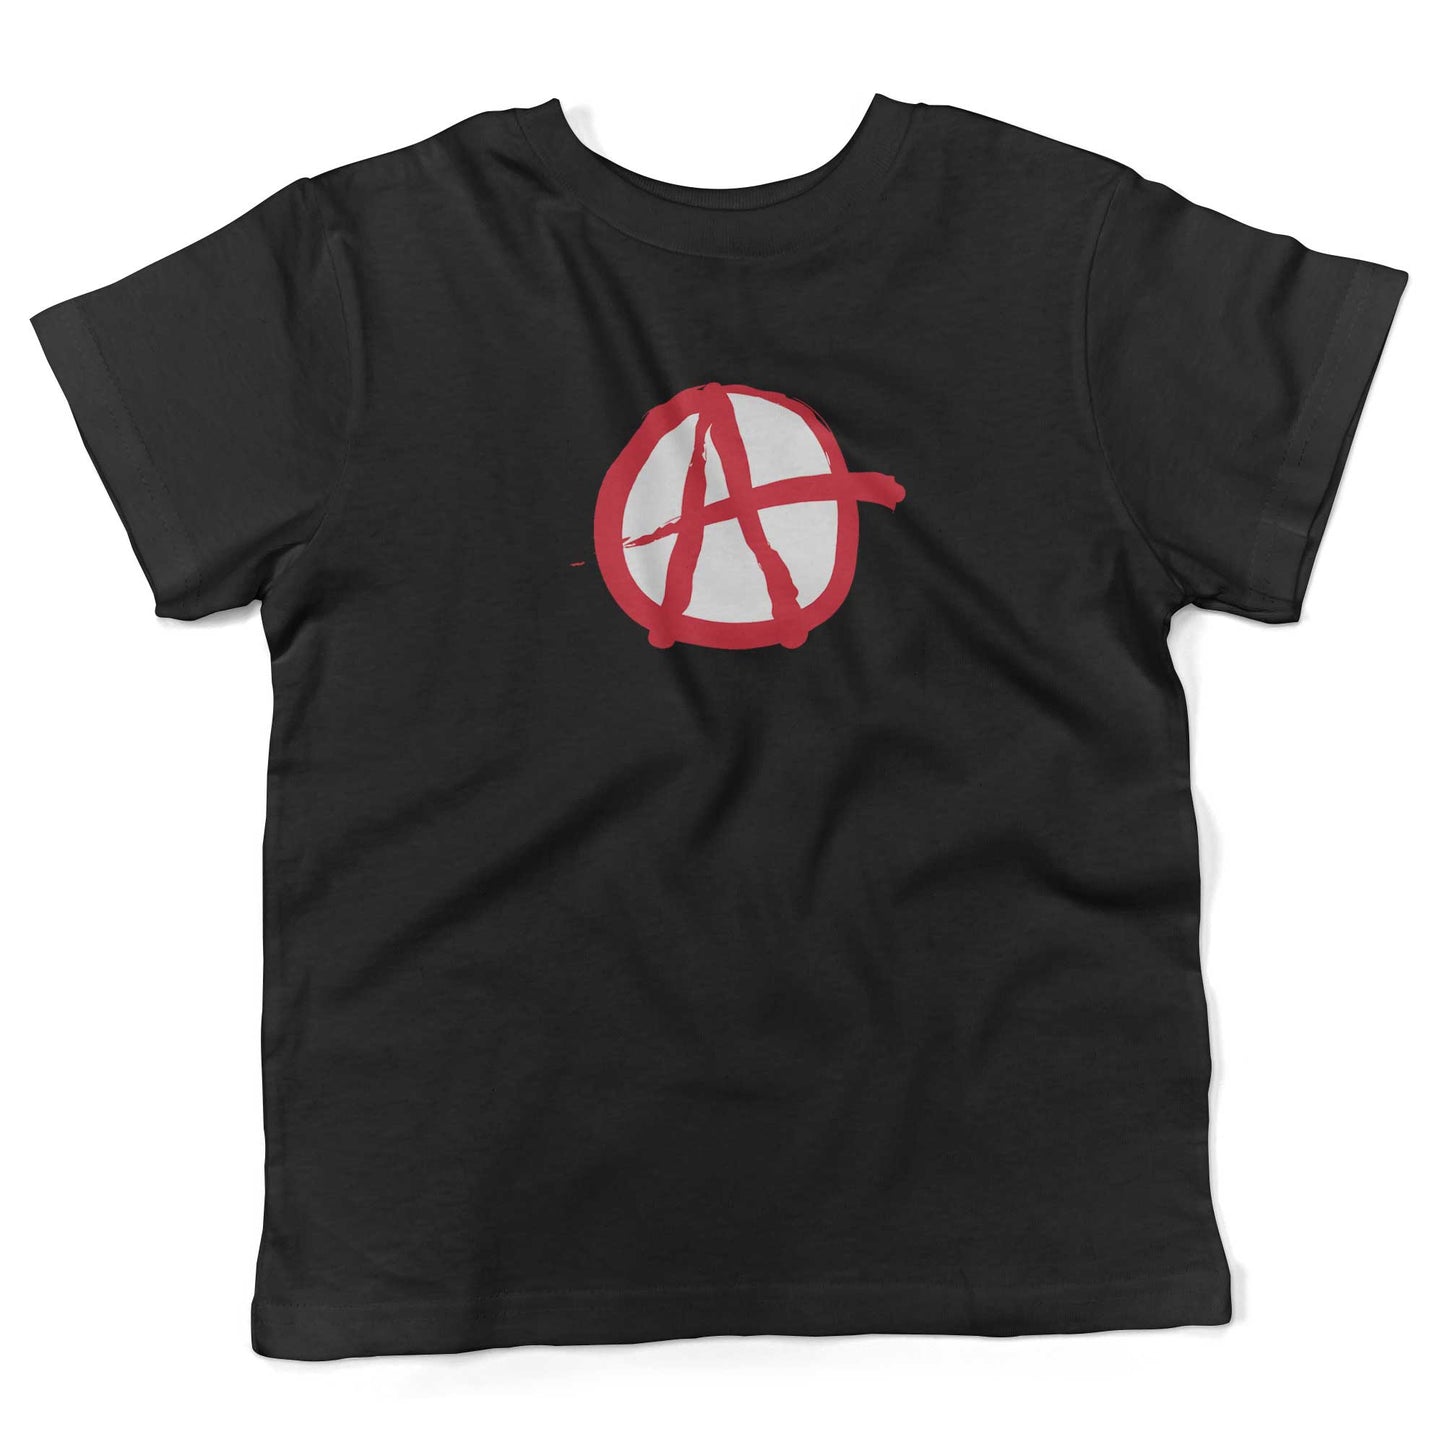 Anarchy Symbol Toddler Shirt-Organic Black-2T